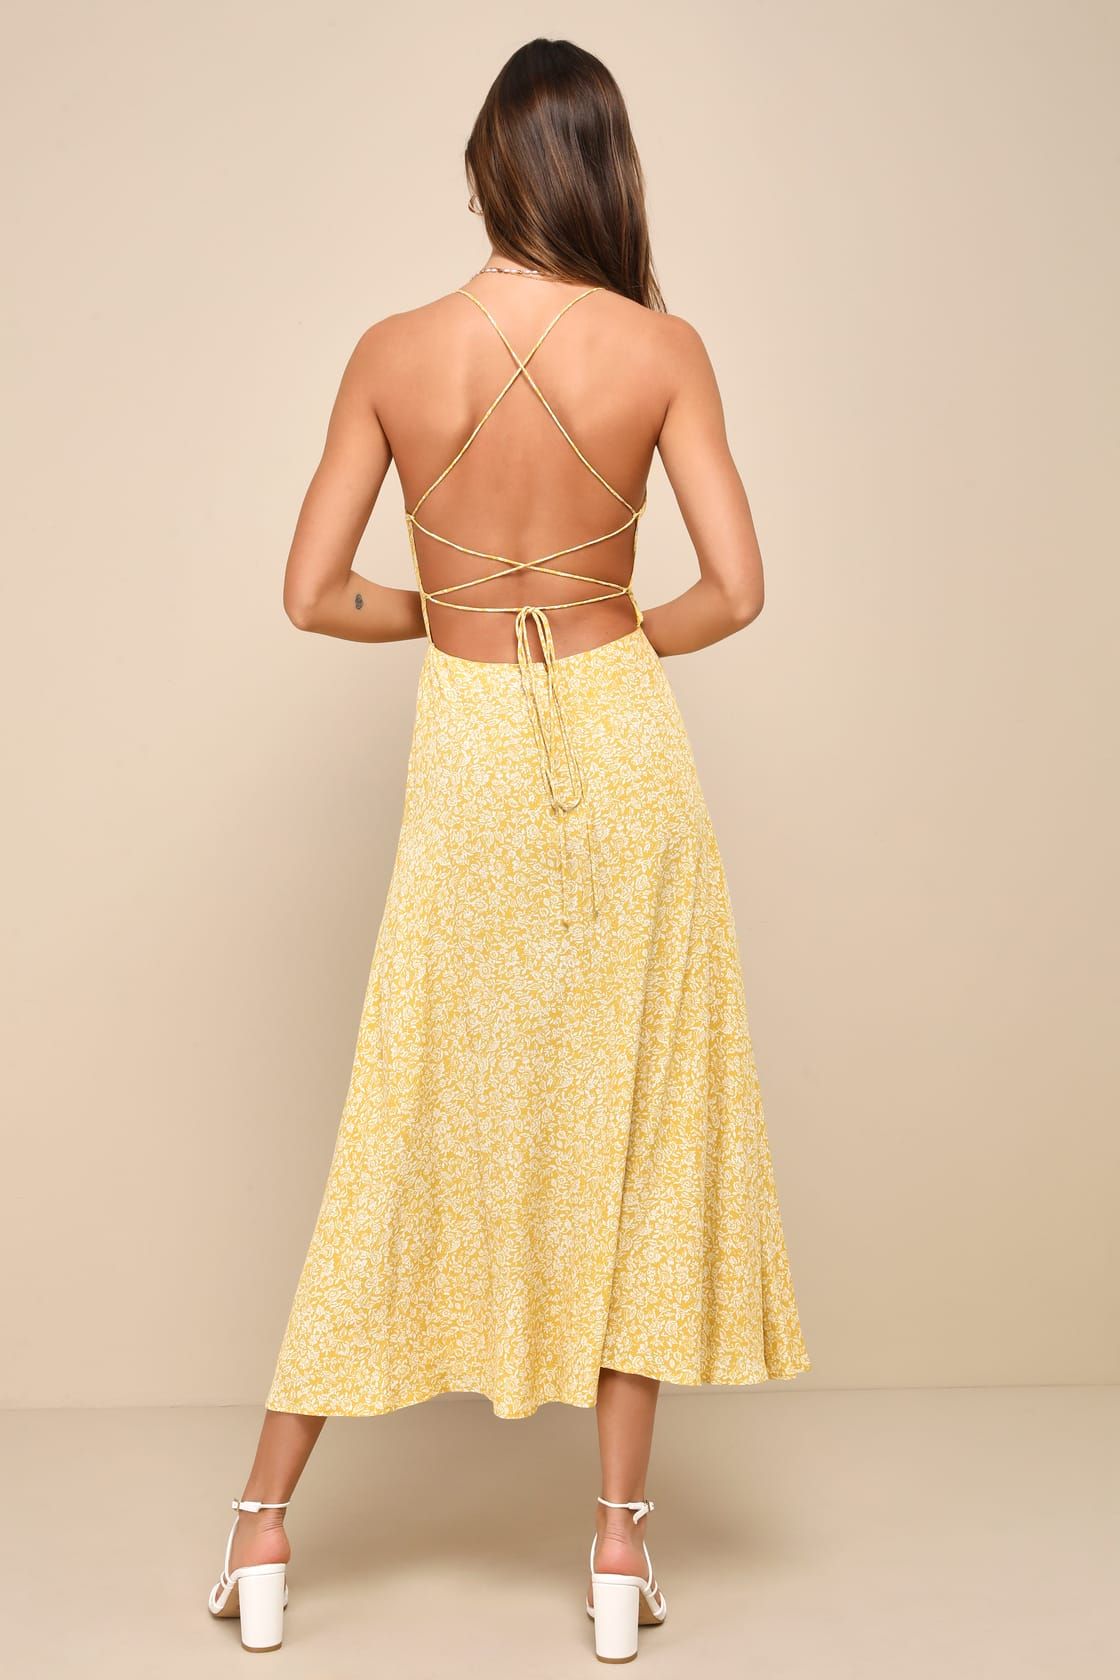 Charming Dedication Yellow Floral Sleeveless Lace-Up Midi Dress | Lulus